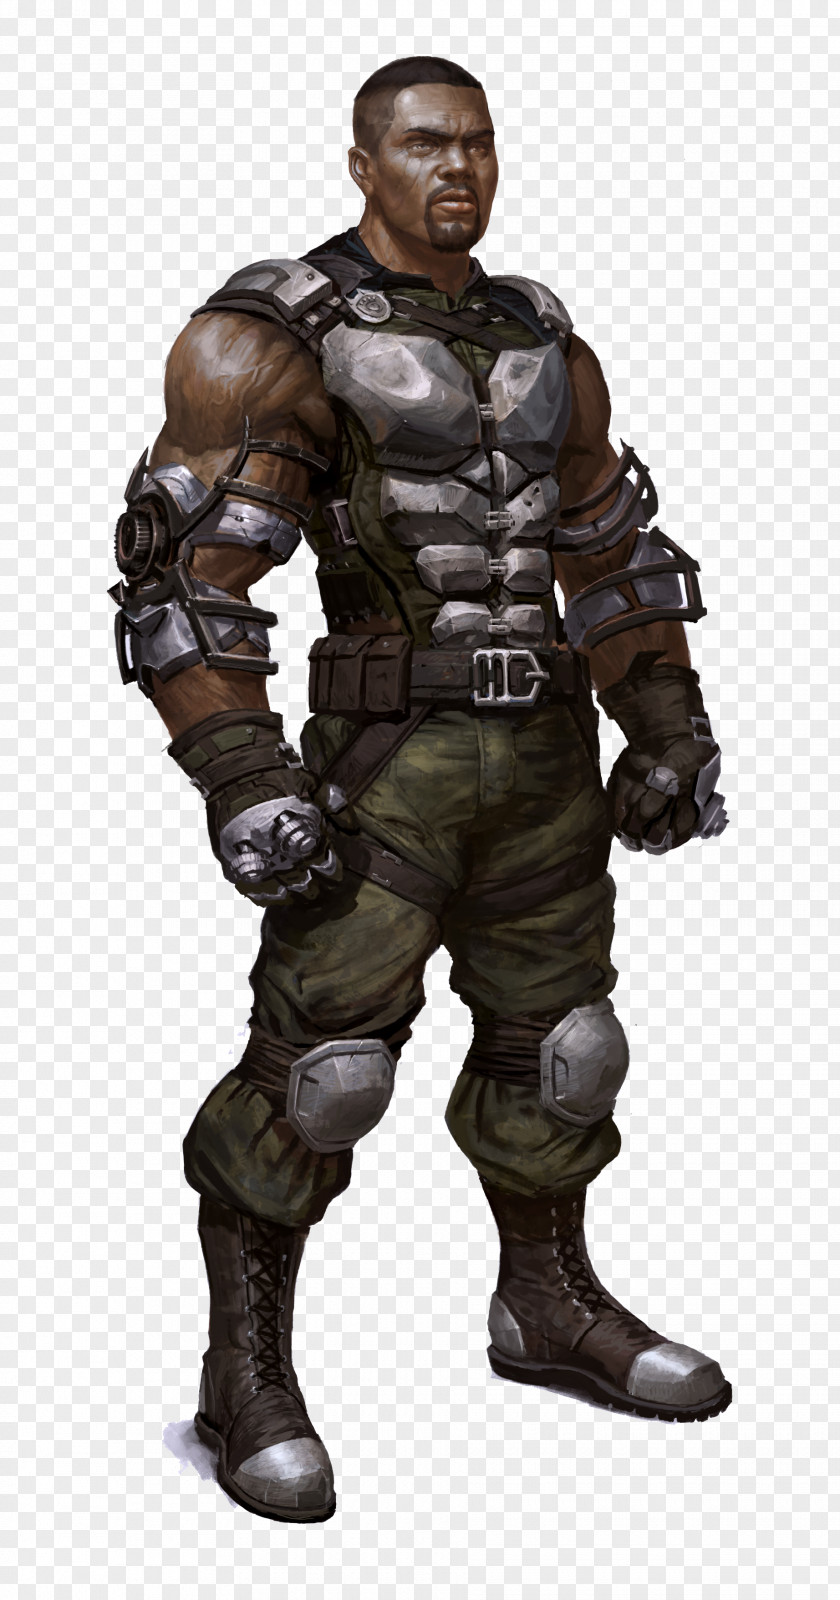 Combat Mortal Kombat: Special Forces Jax Sonya Blade Kombat II PNG